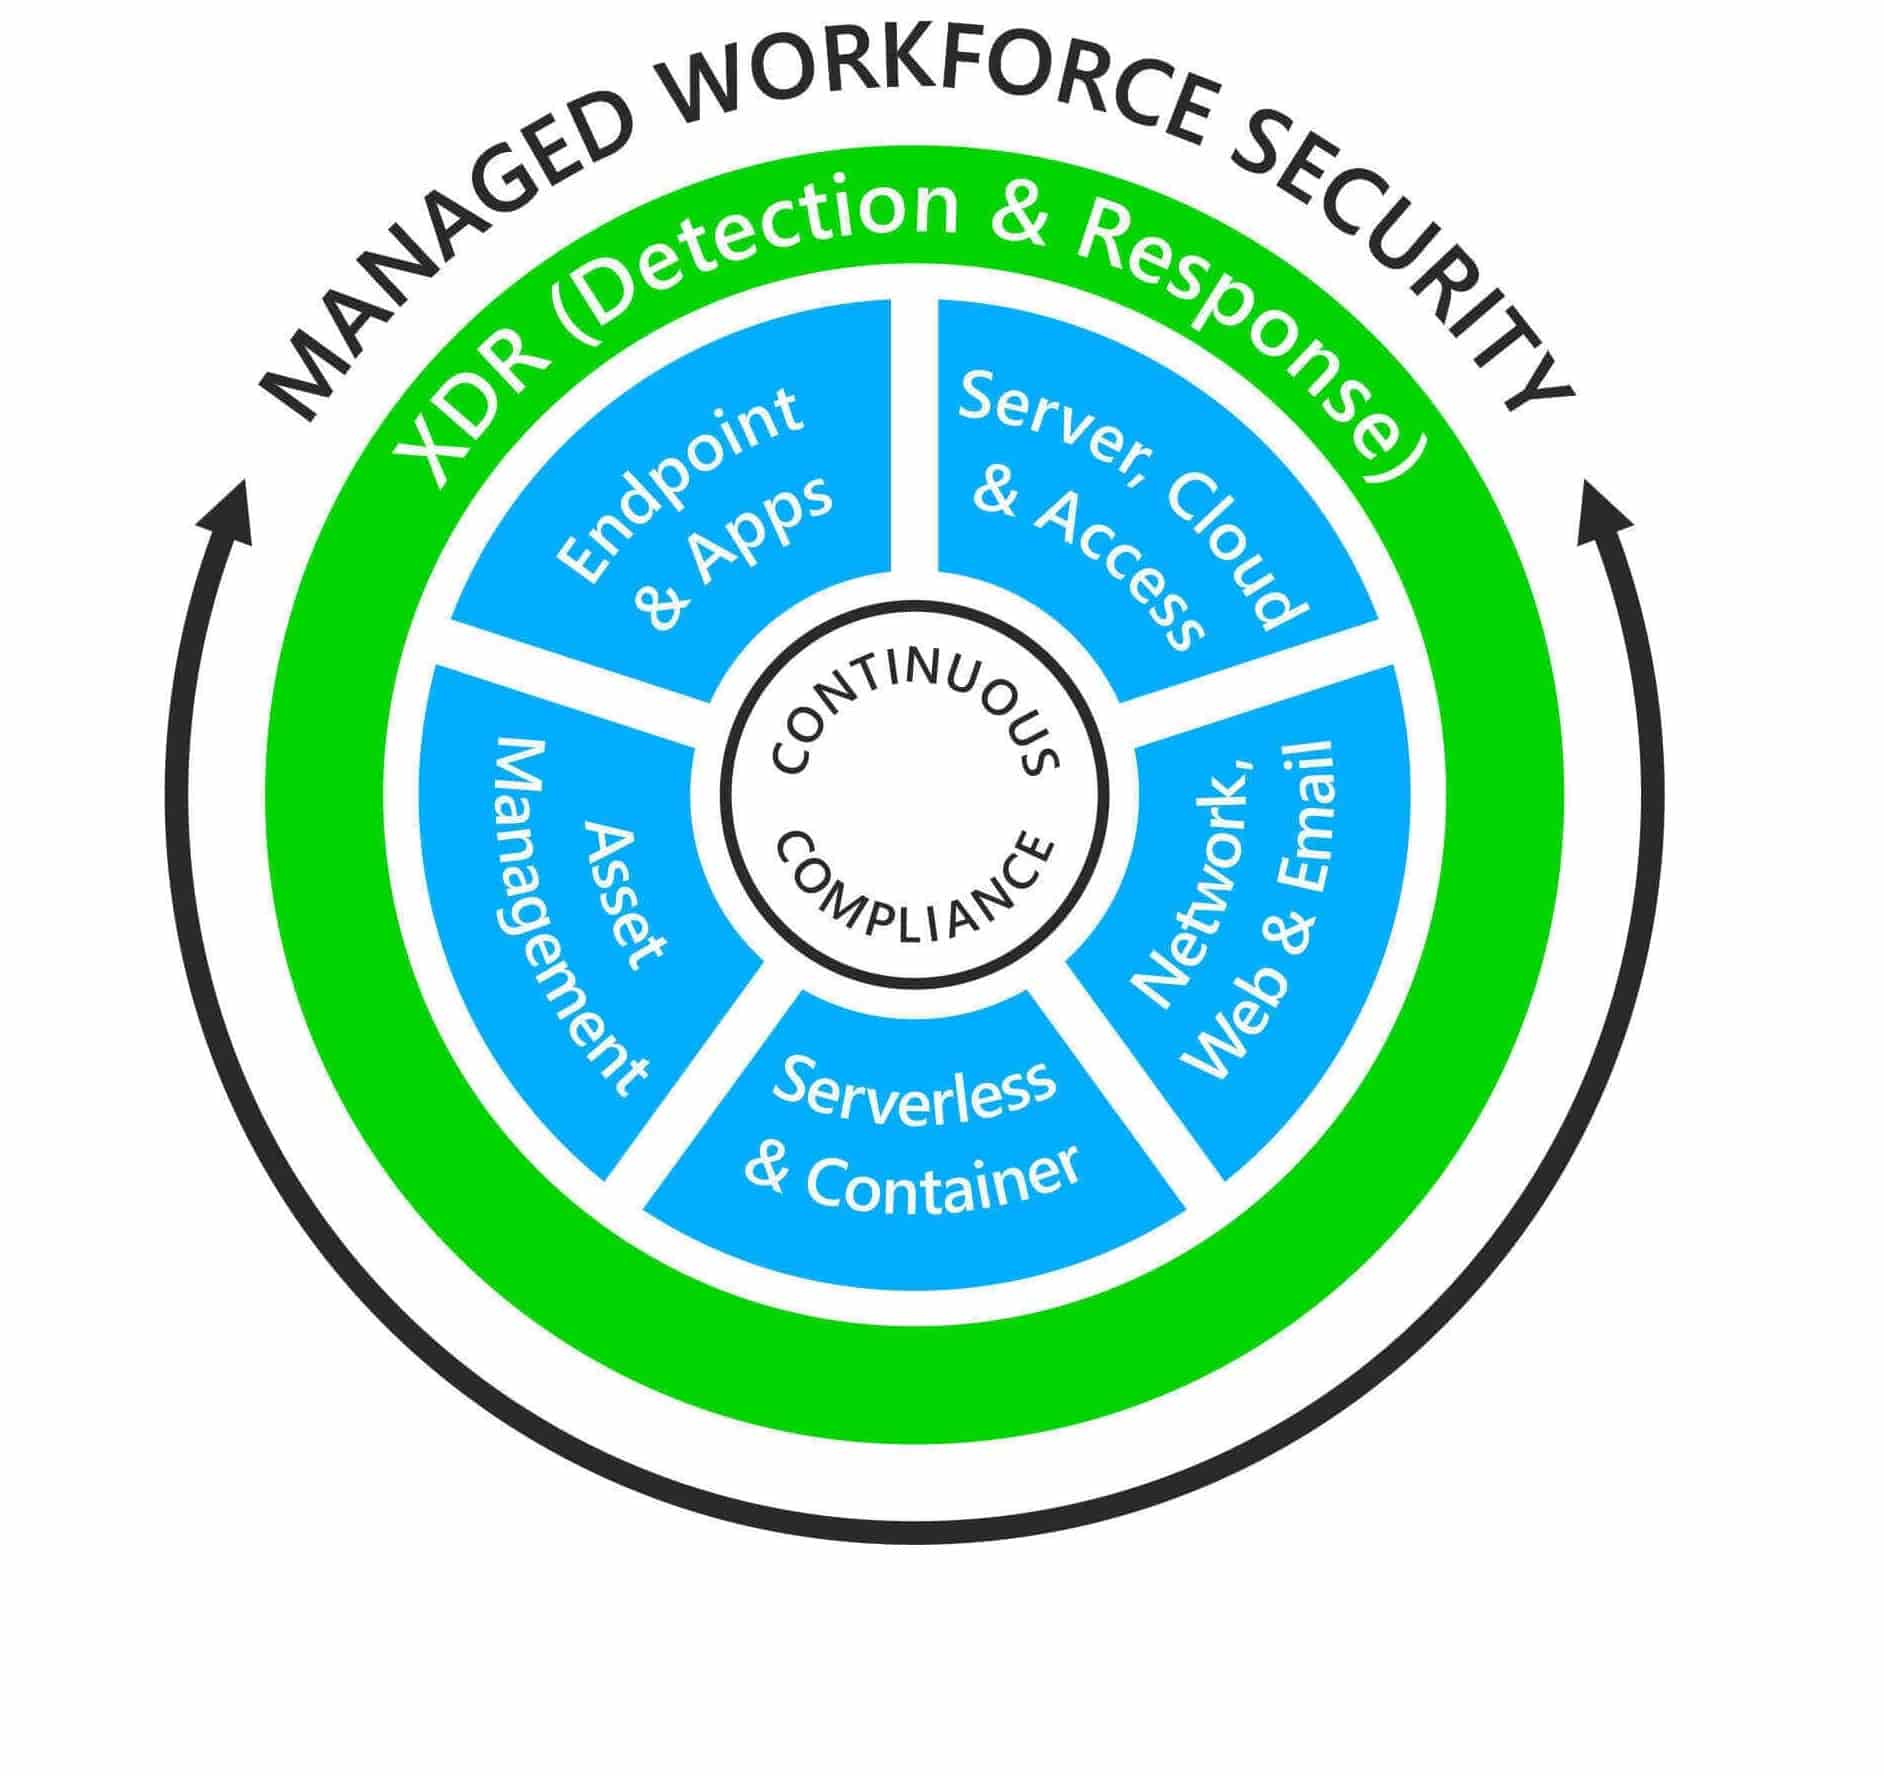 managed workforce security wiel